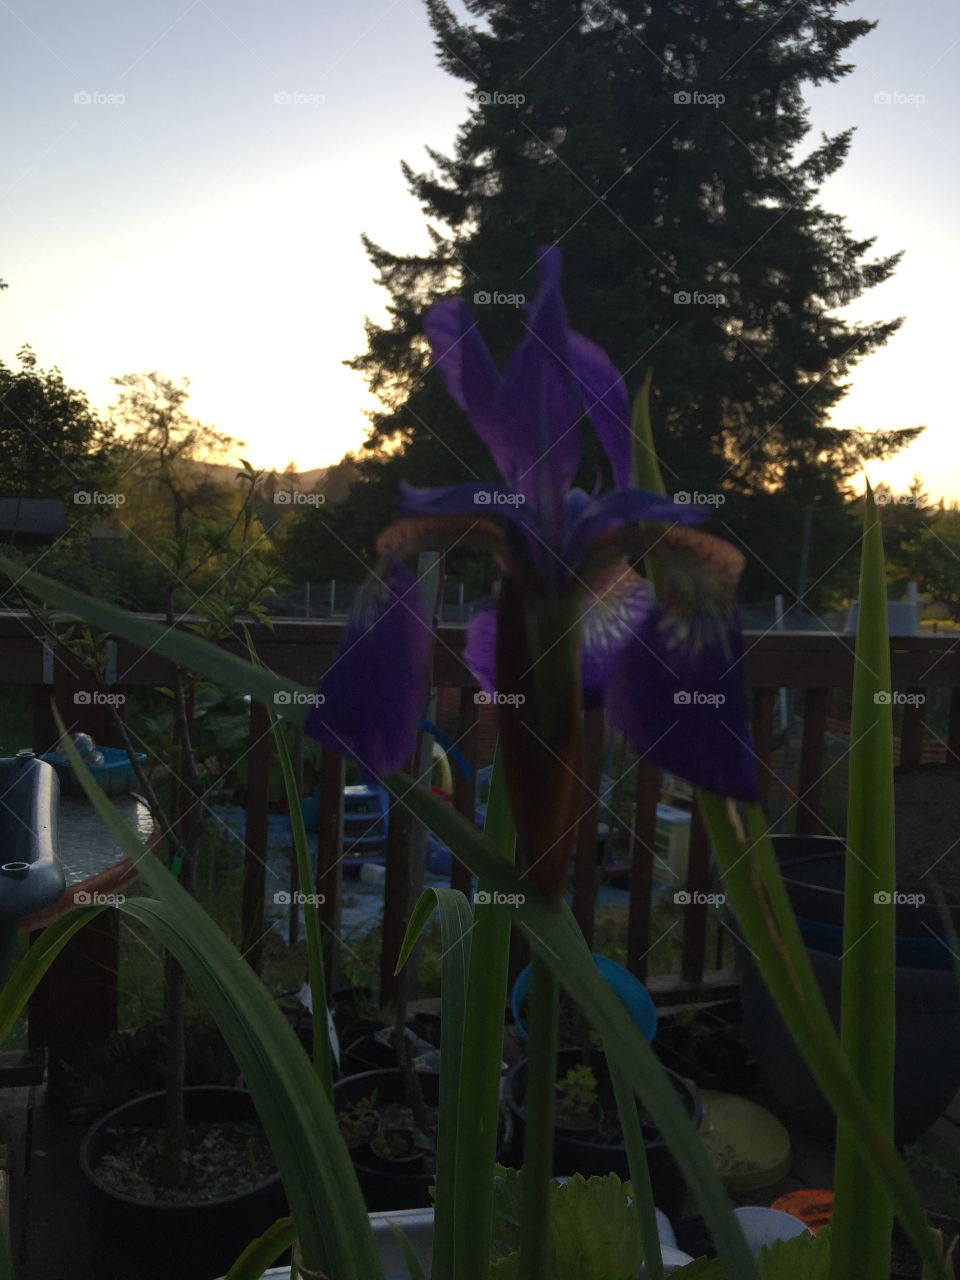 Lovely iris!!!